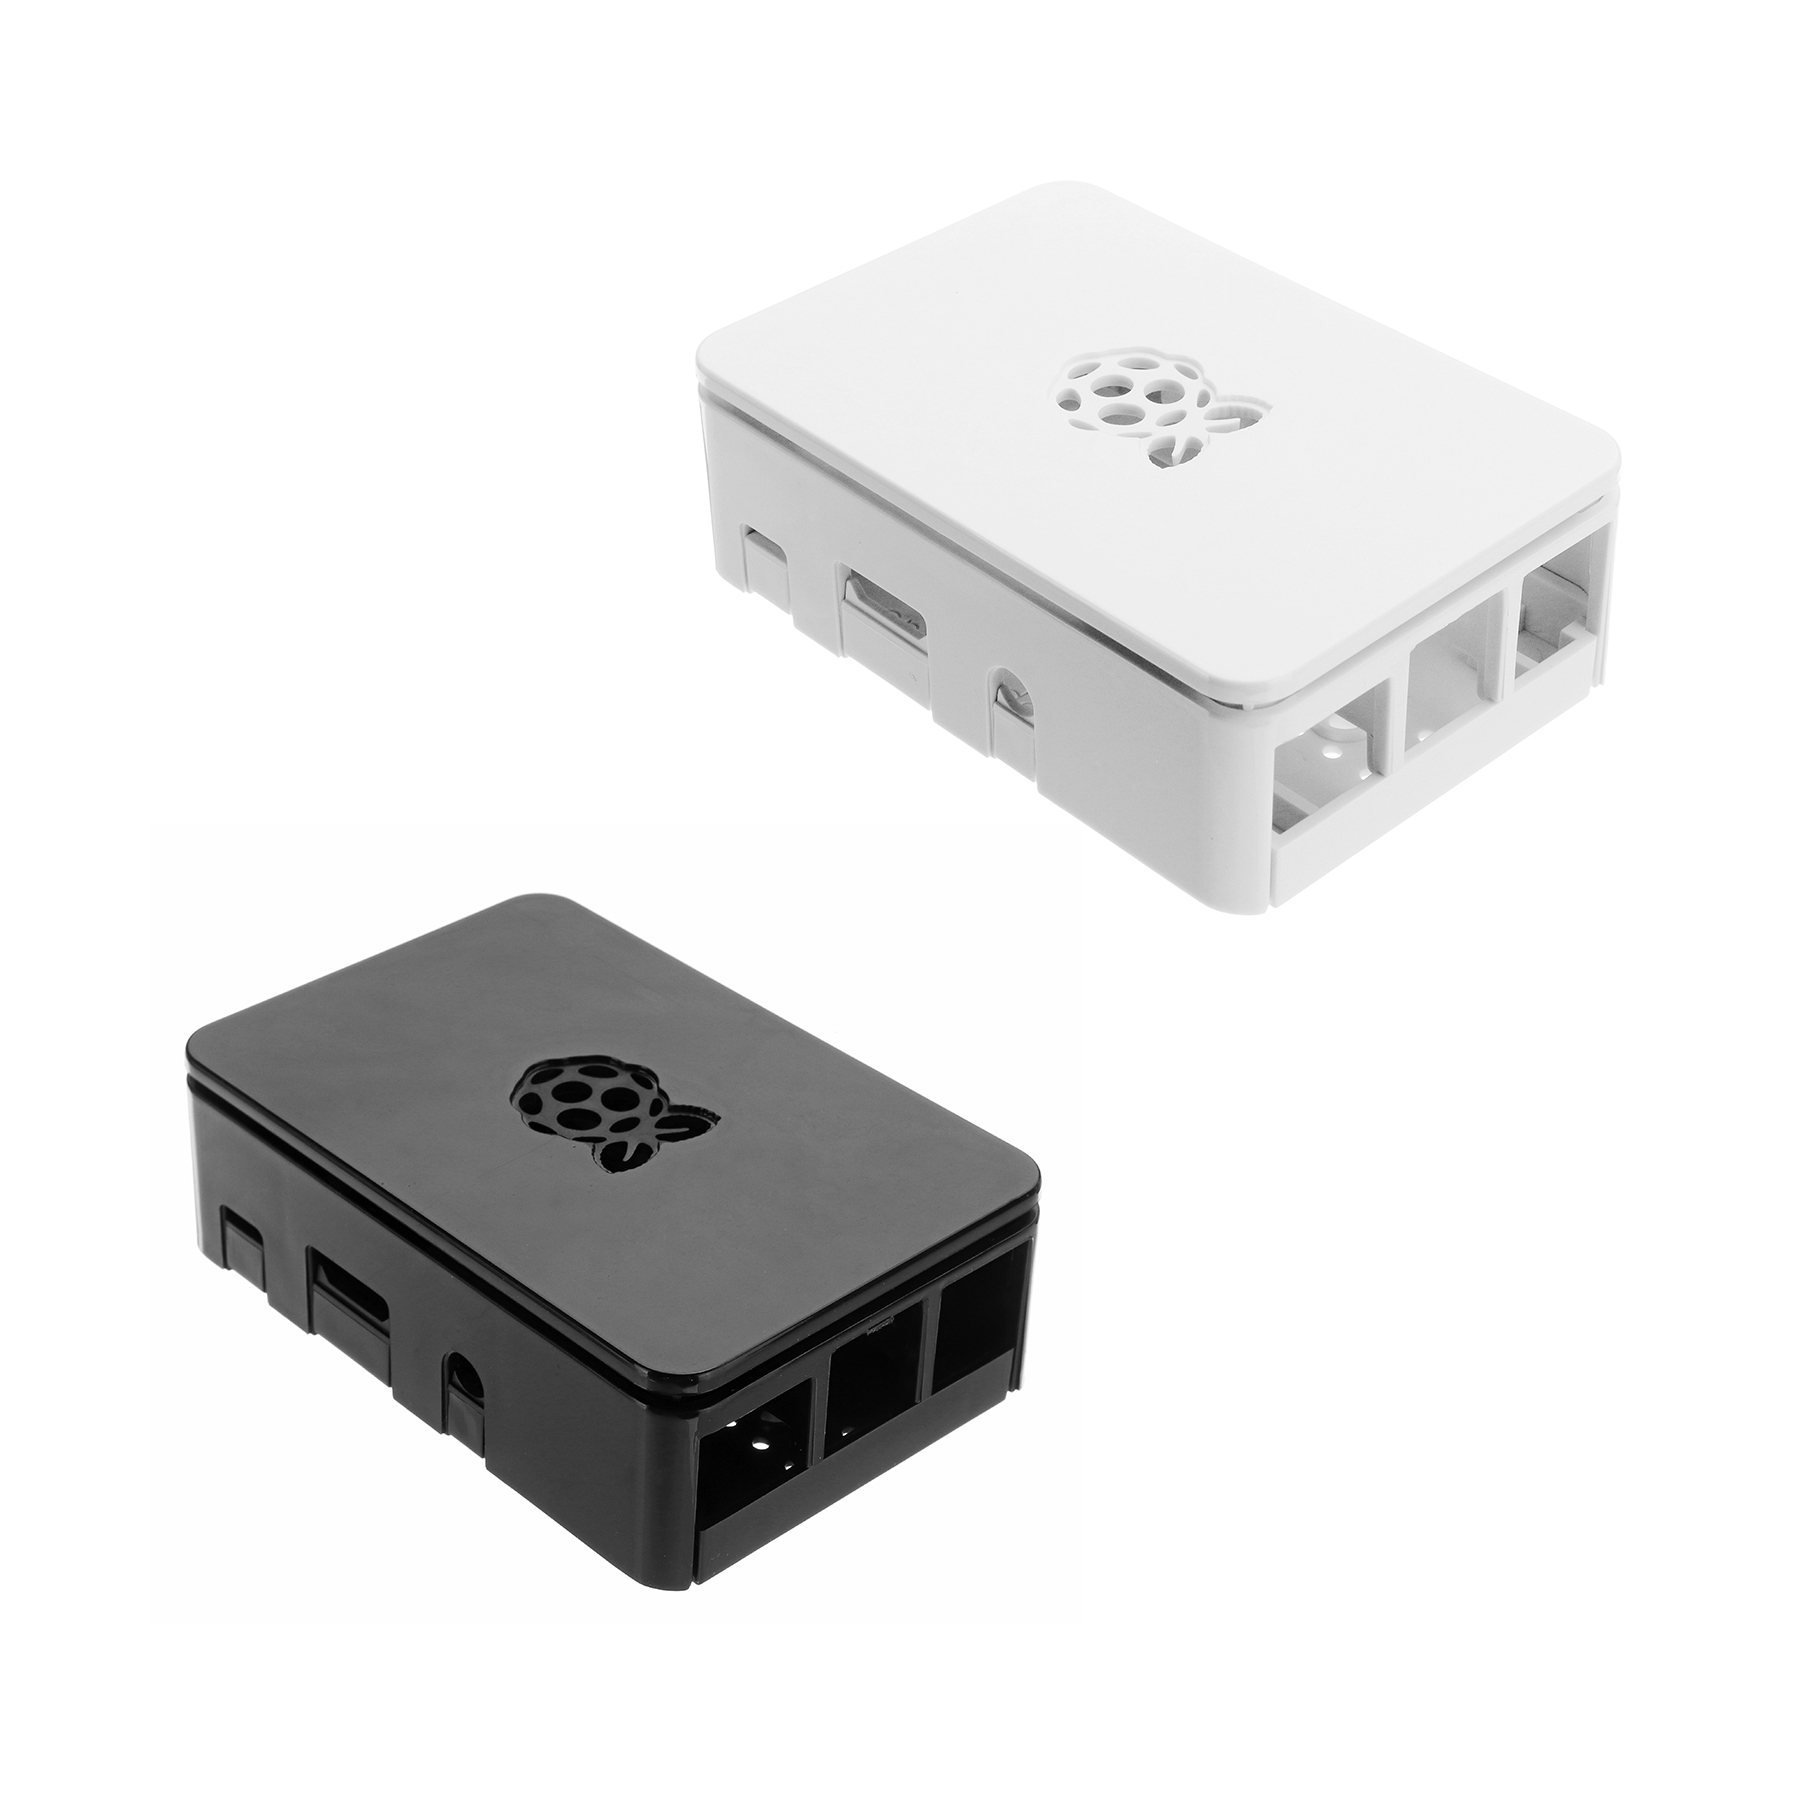 

Black/White Raspberry Pi Case VS4+ ABS Enclosure Box For Raspberry Pi 3 Model B+